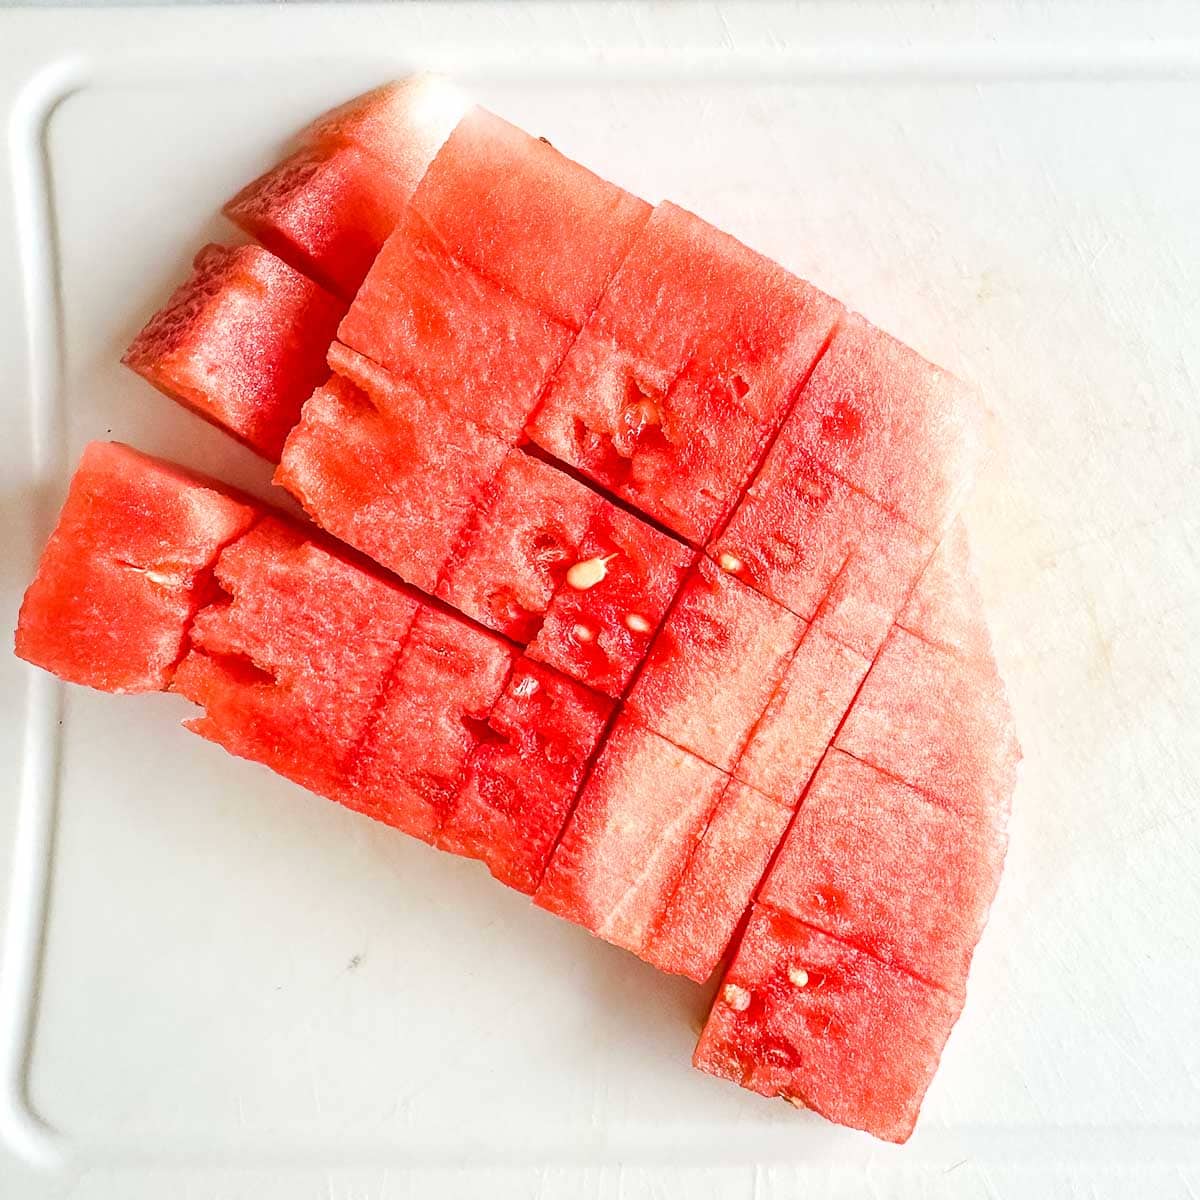 Cubed watermelon on a cutting board.